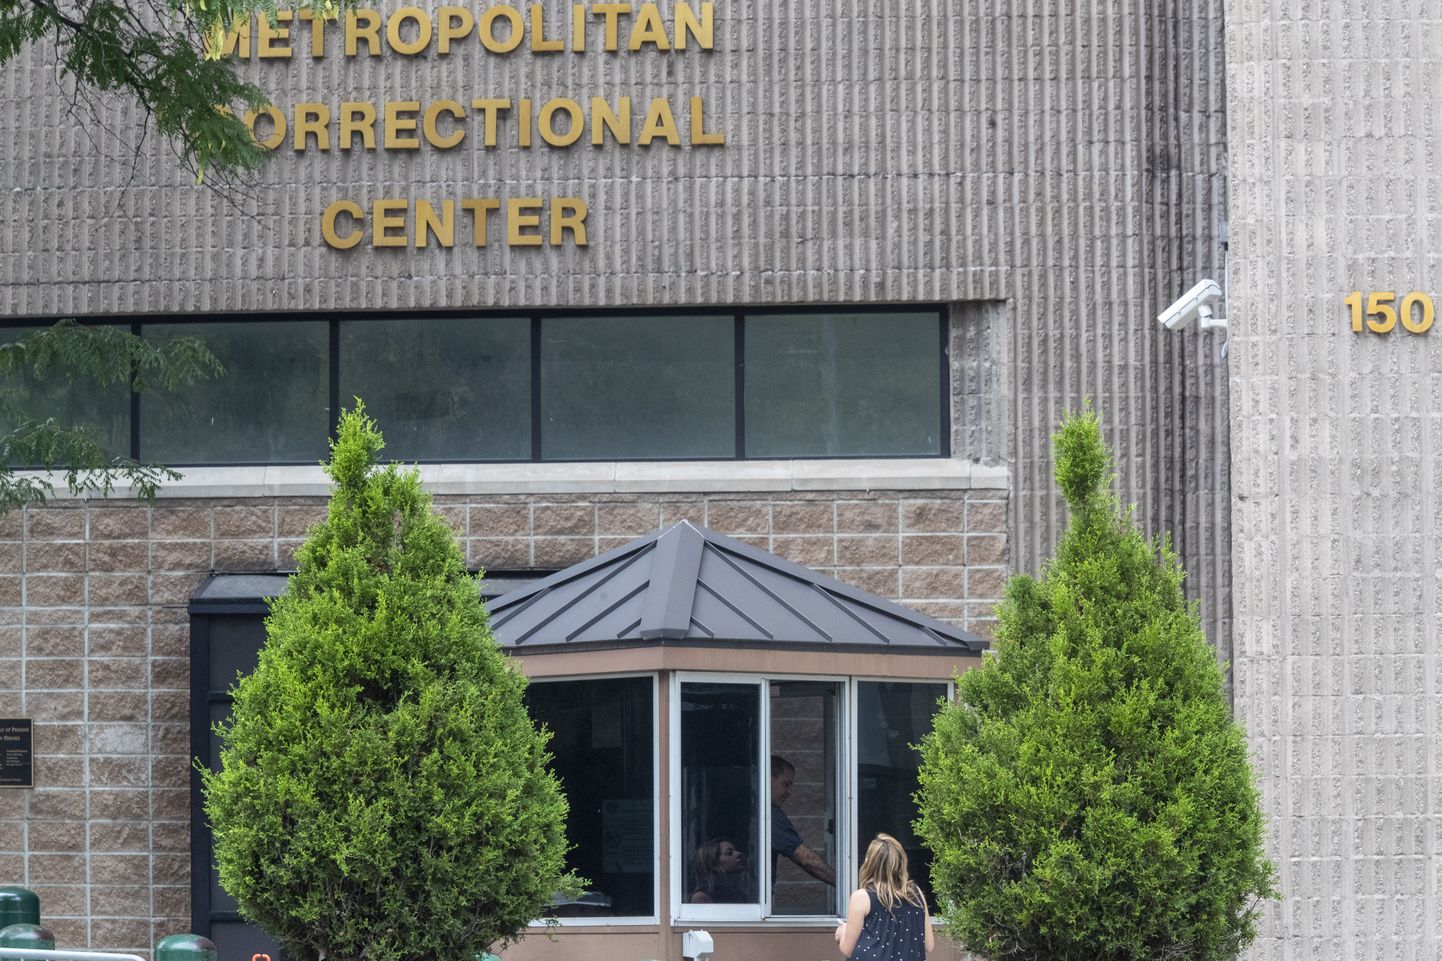 New Yorgi Metropolitan Correctional Center vangla, kus Jeffrey Epstein leiti 10. augustil surnuna